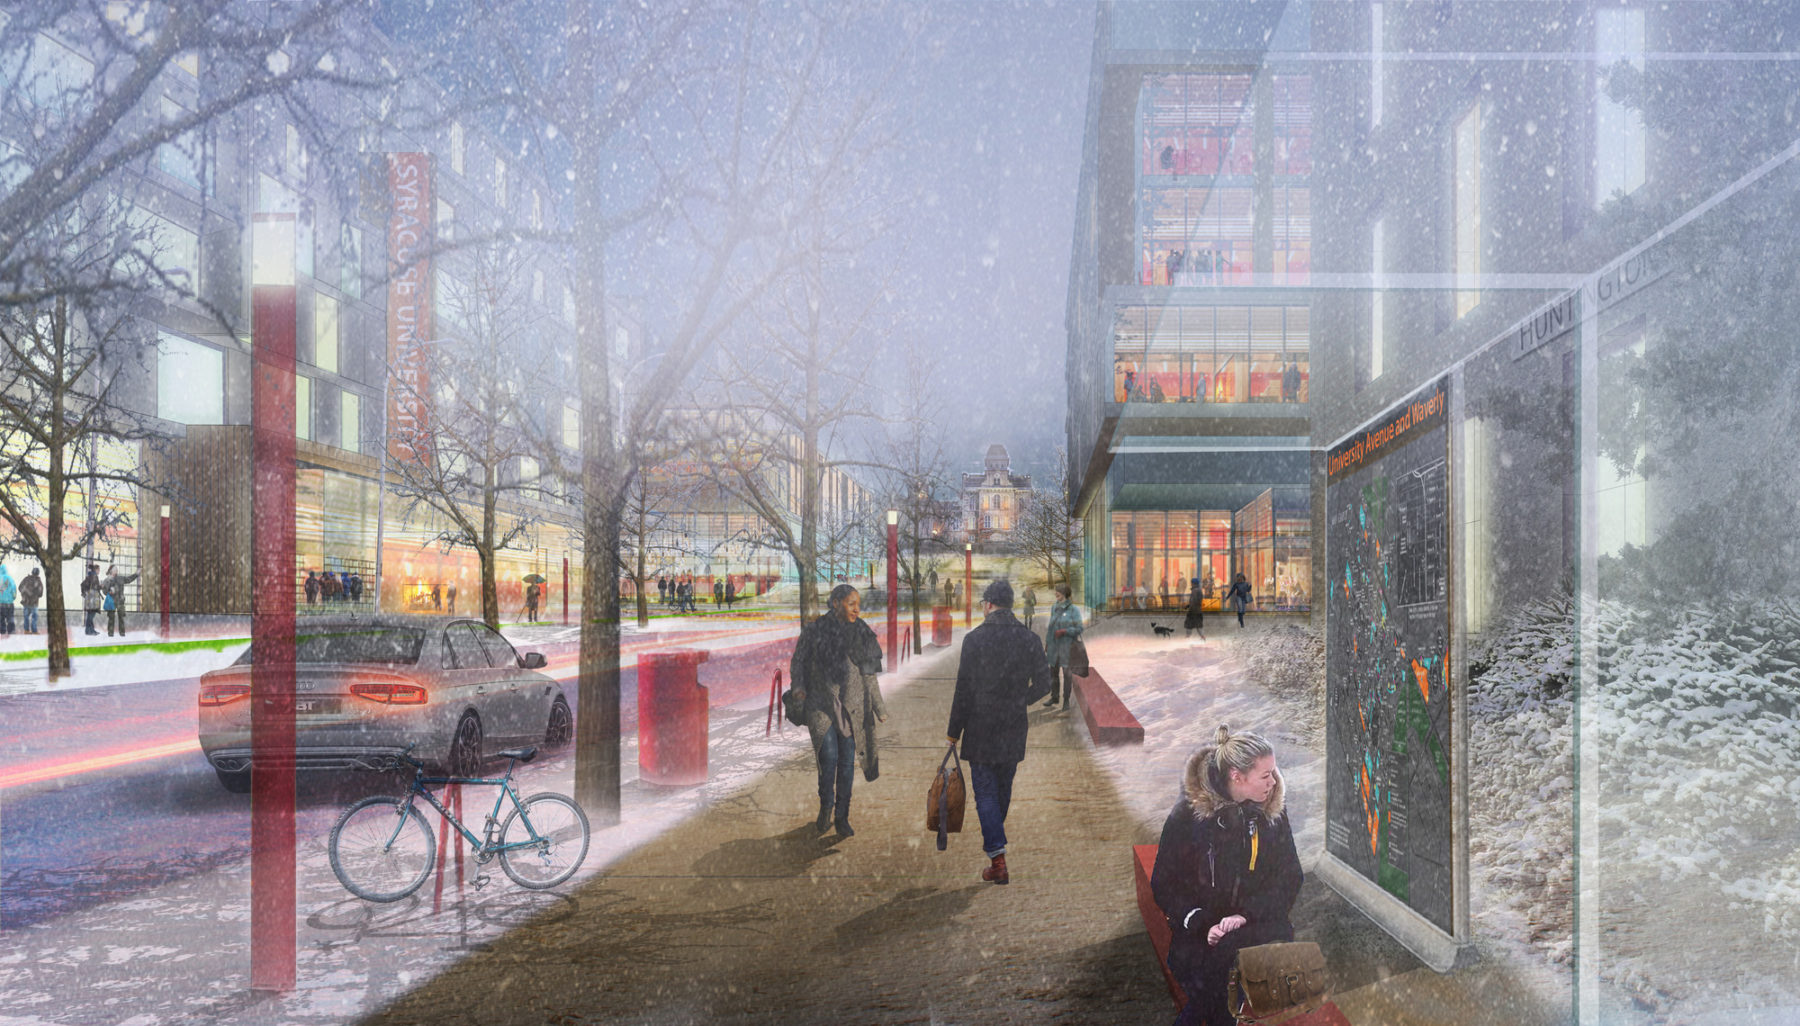 rendering of campus in winter